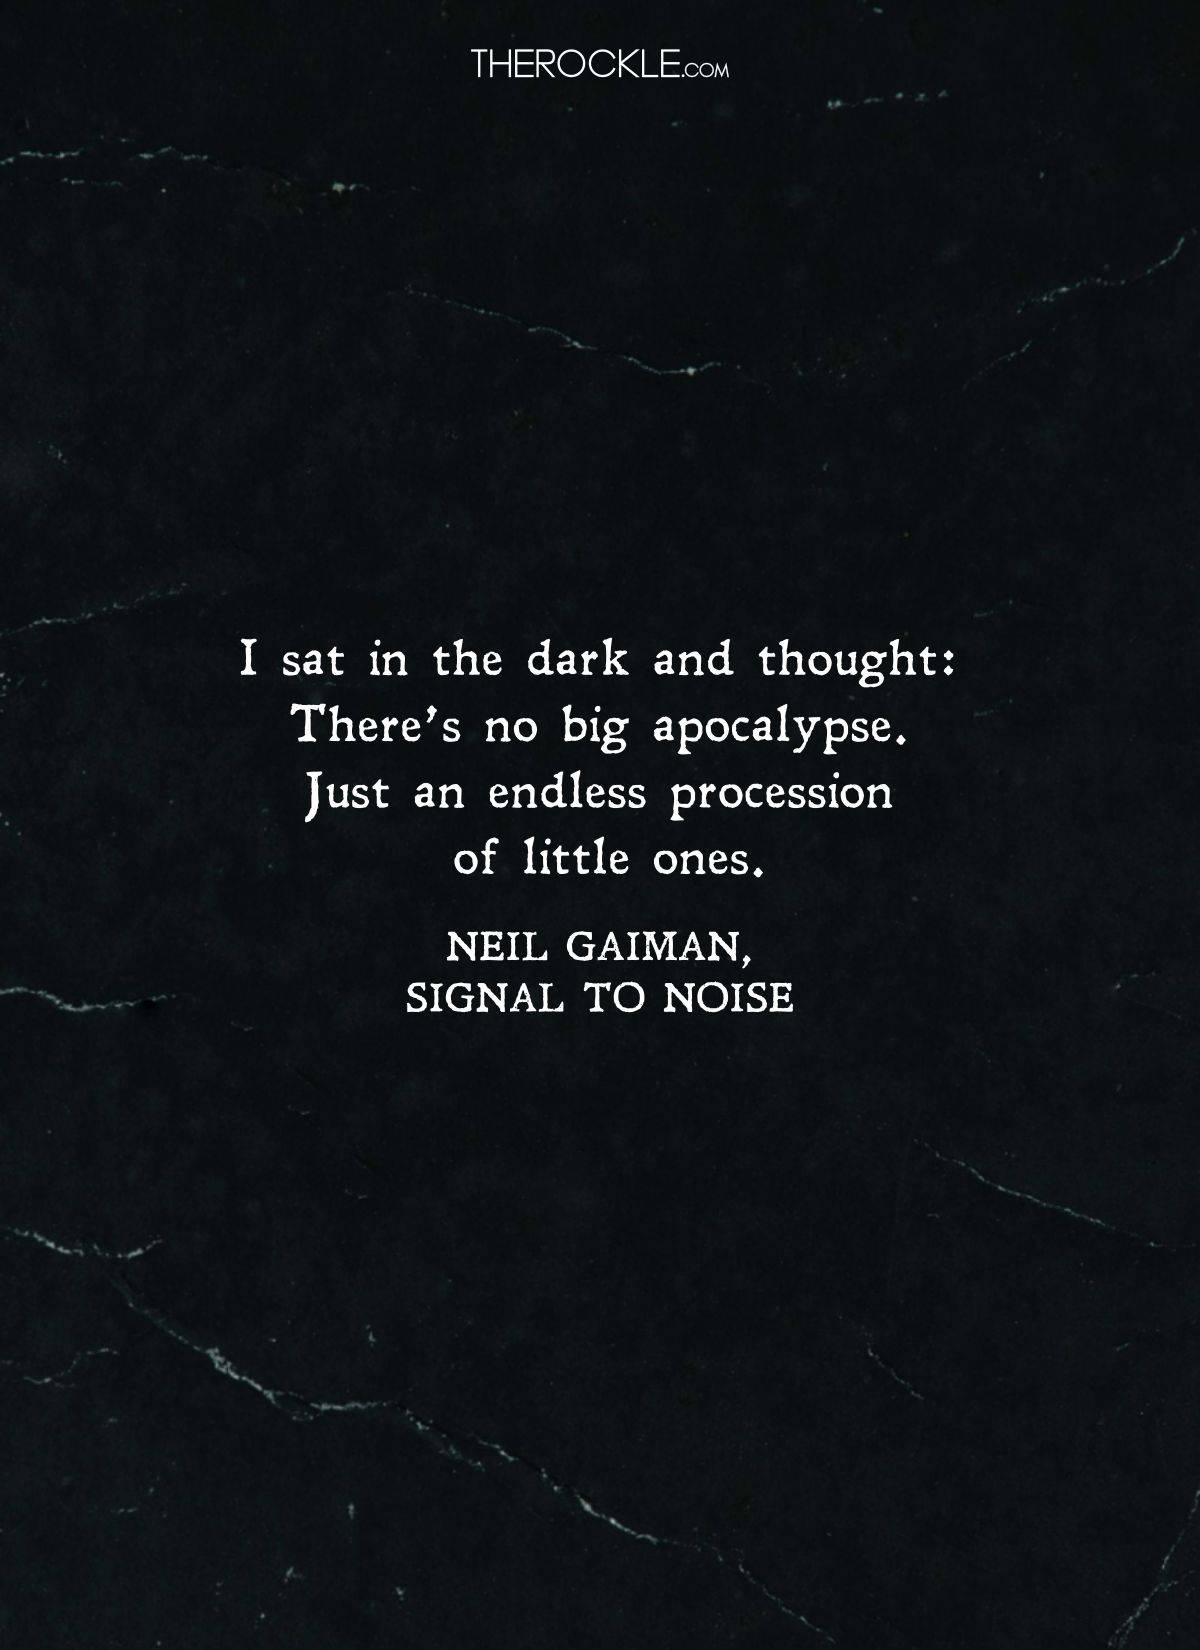 Neil Gaiman's quote about life's troubles